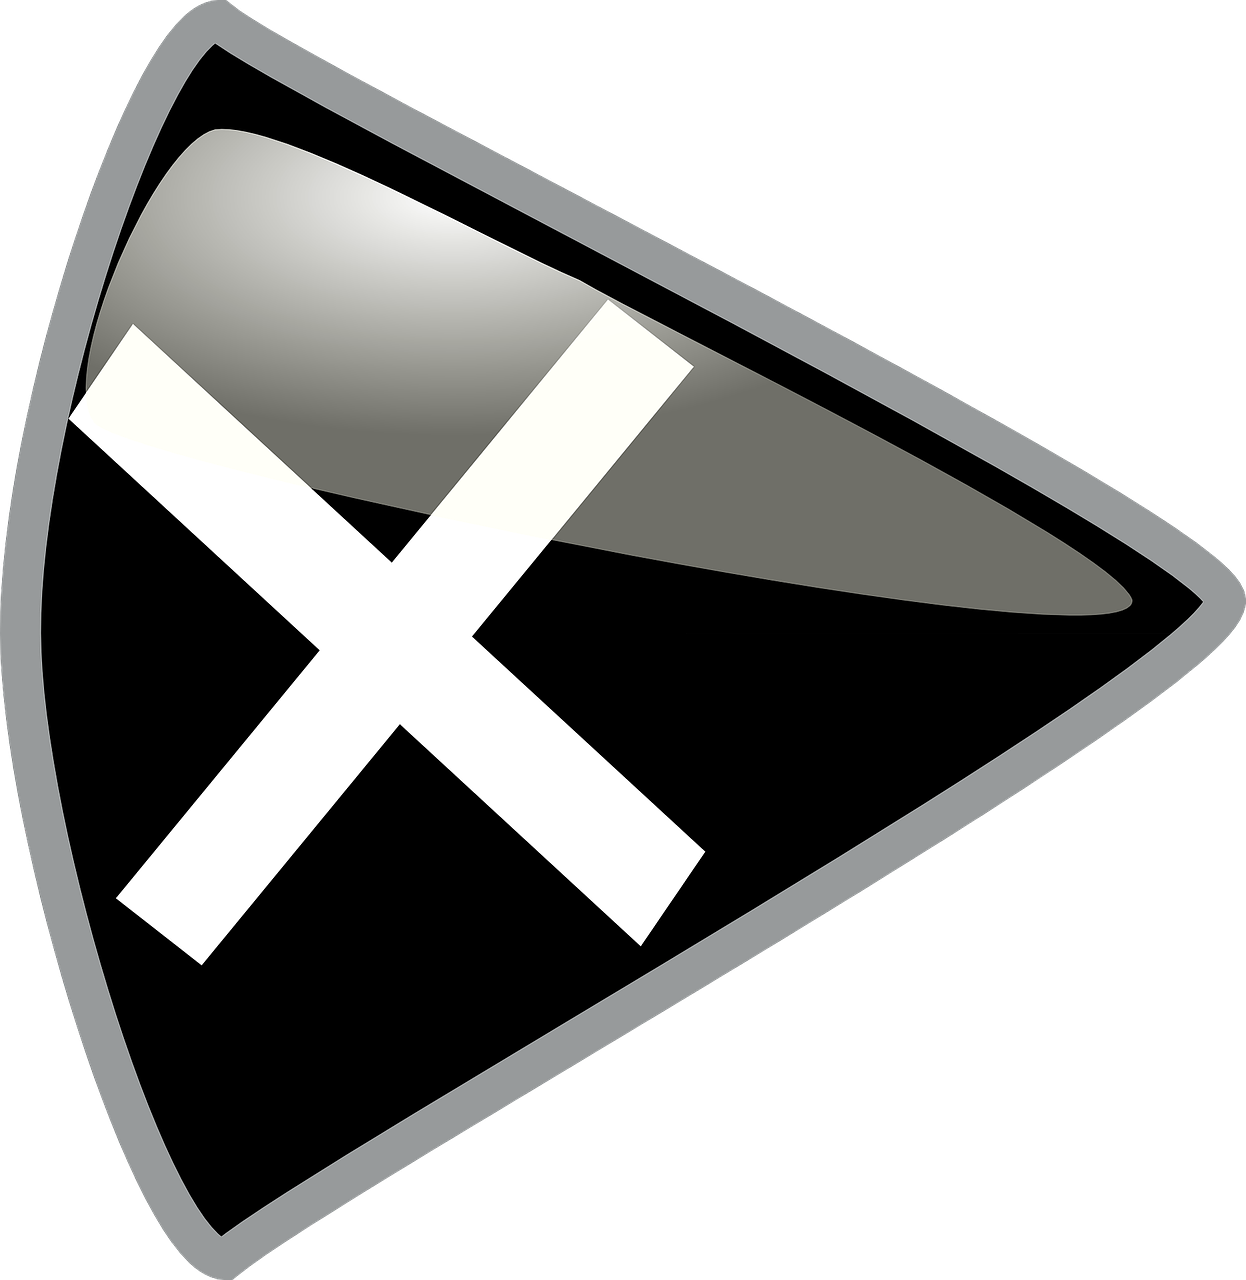 letter x shield logo free photo